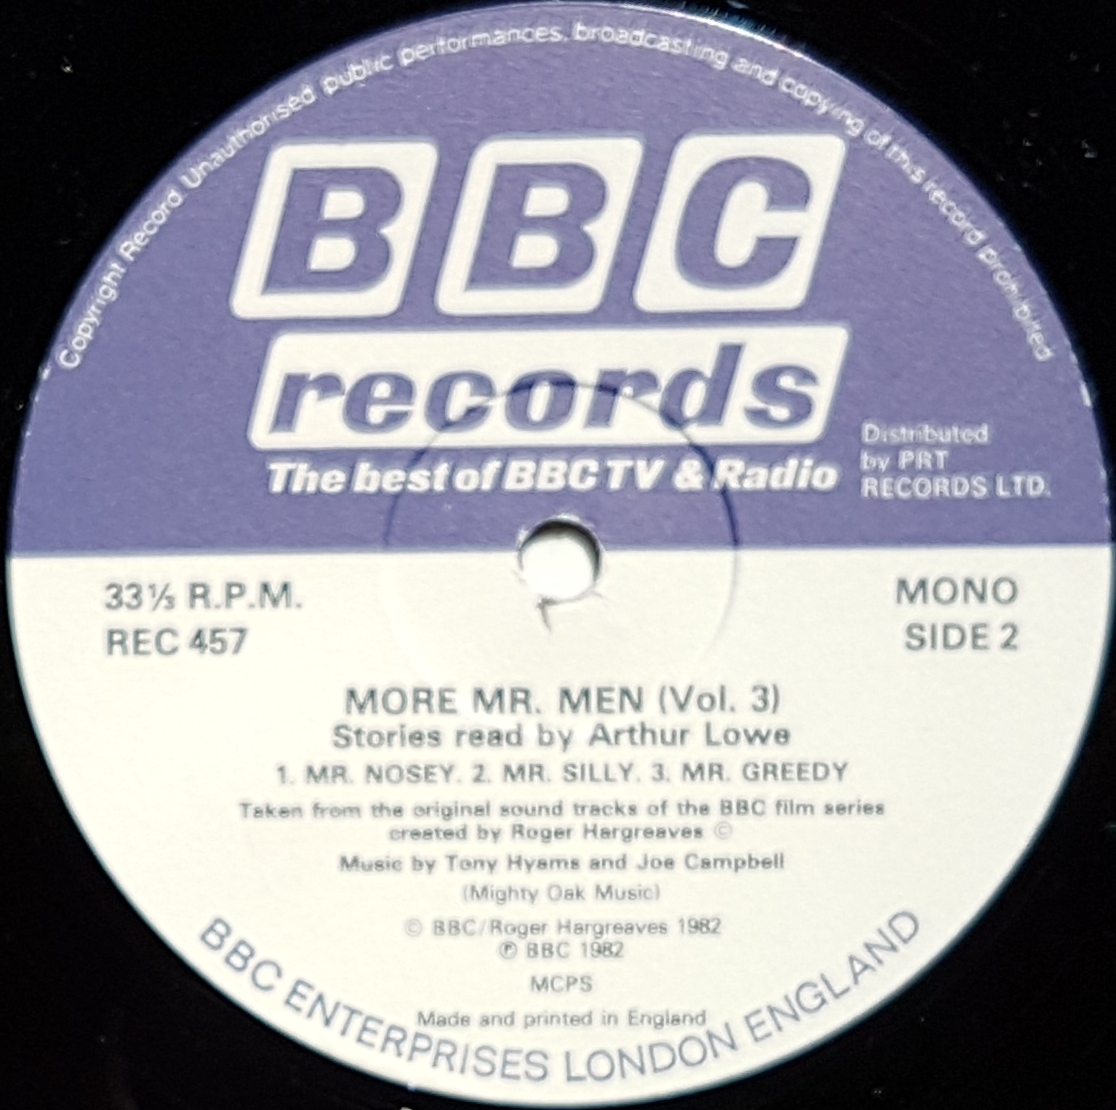 Fourth BBC Albums label